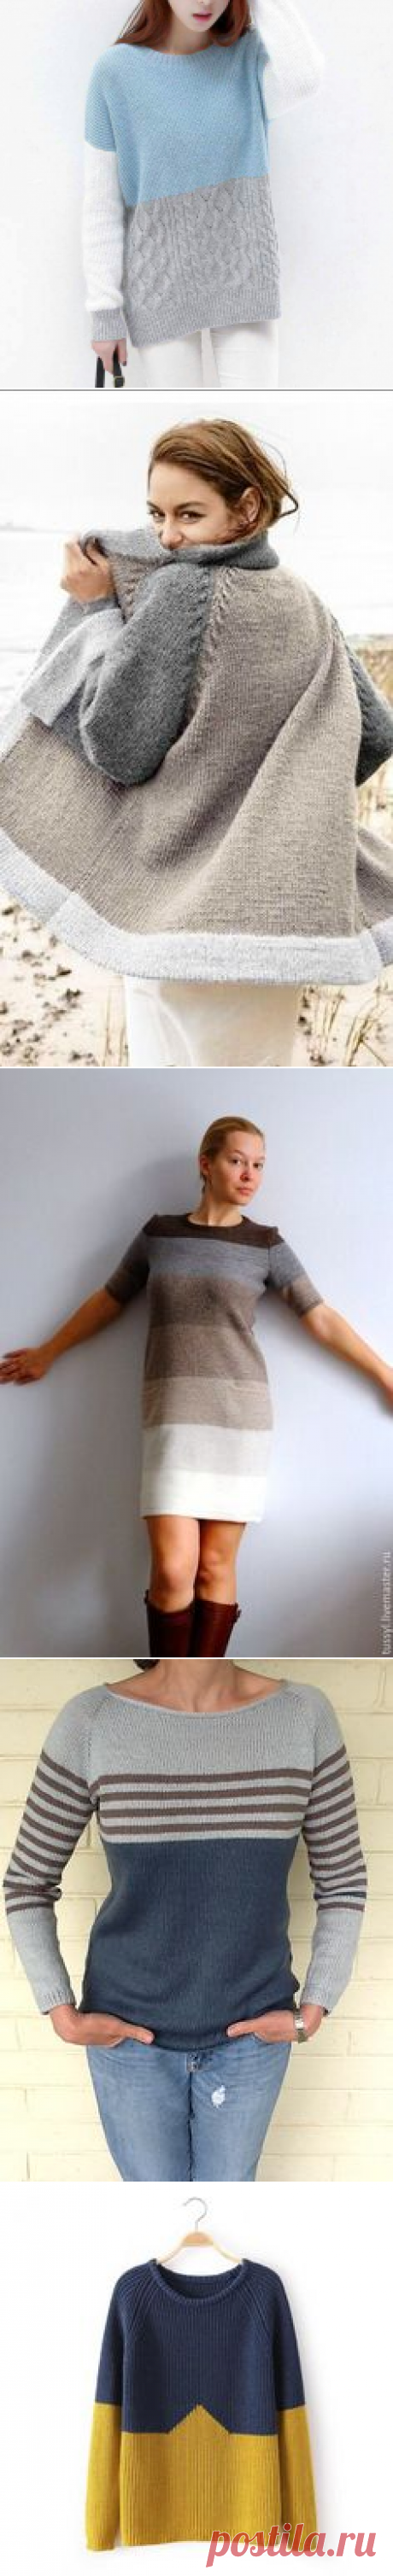 (17) Pin by Elina Urmas on Aran sweaters